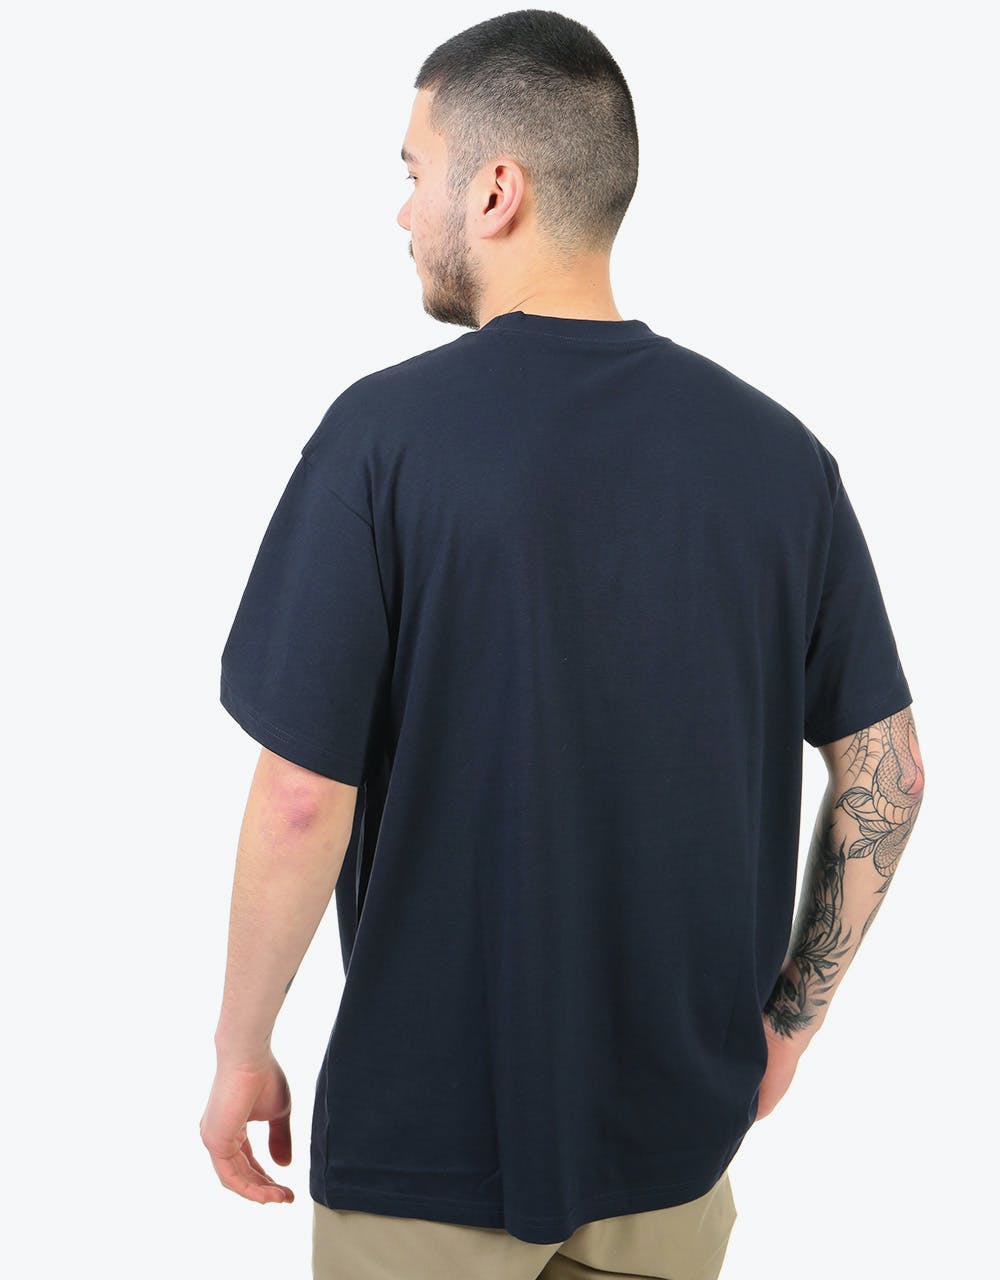 Carhartt WIP S/S Script Embroidery T-Shirt - Dark Navy/White